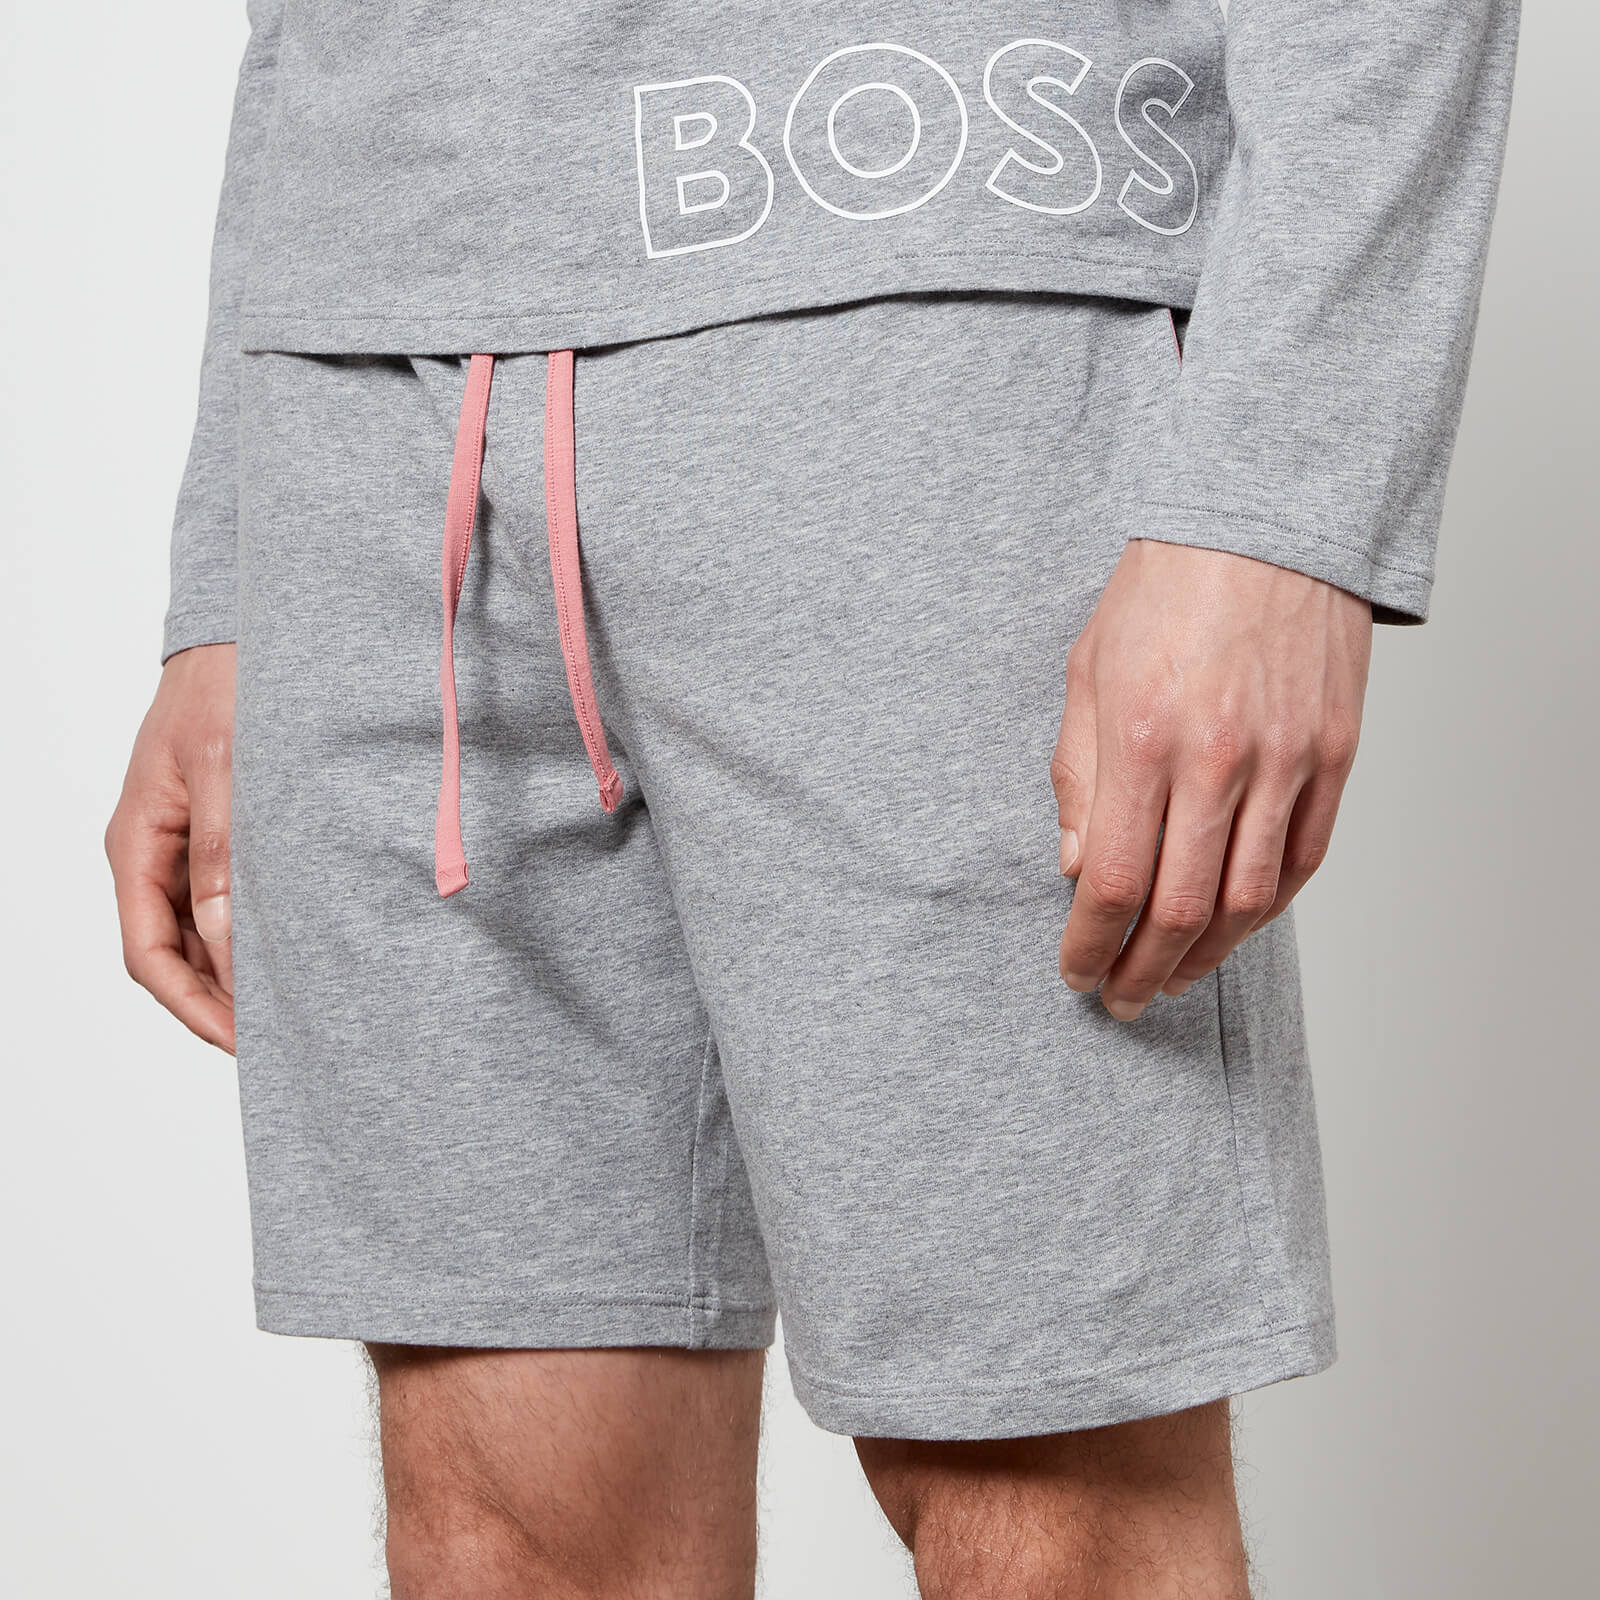 BOSS Bodywear Men's Mix&Match Shorts - Medium Grey - S